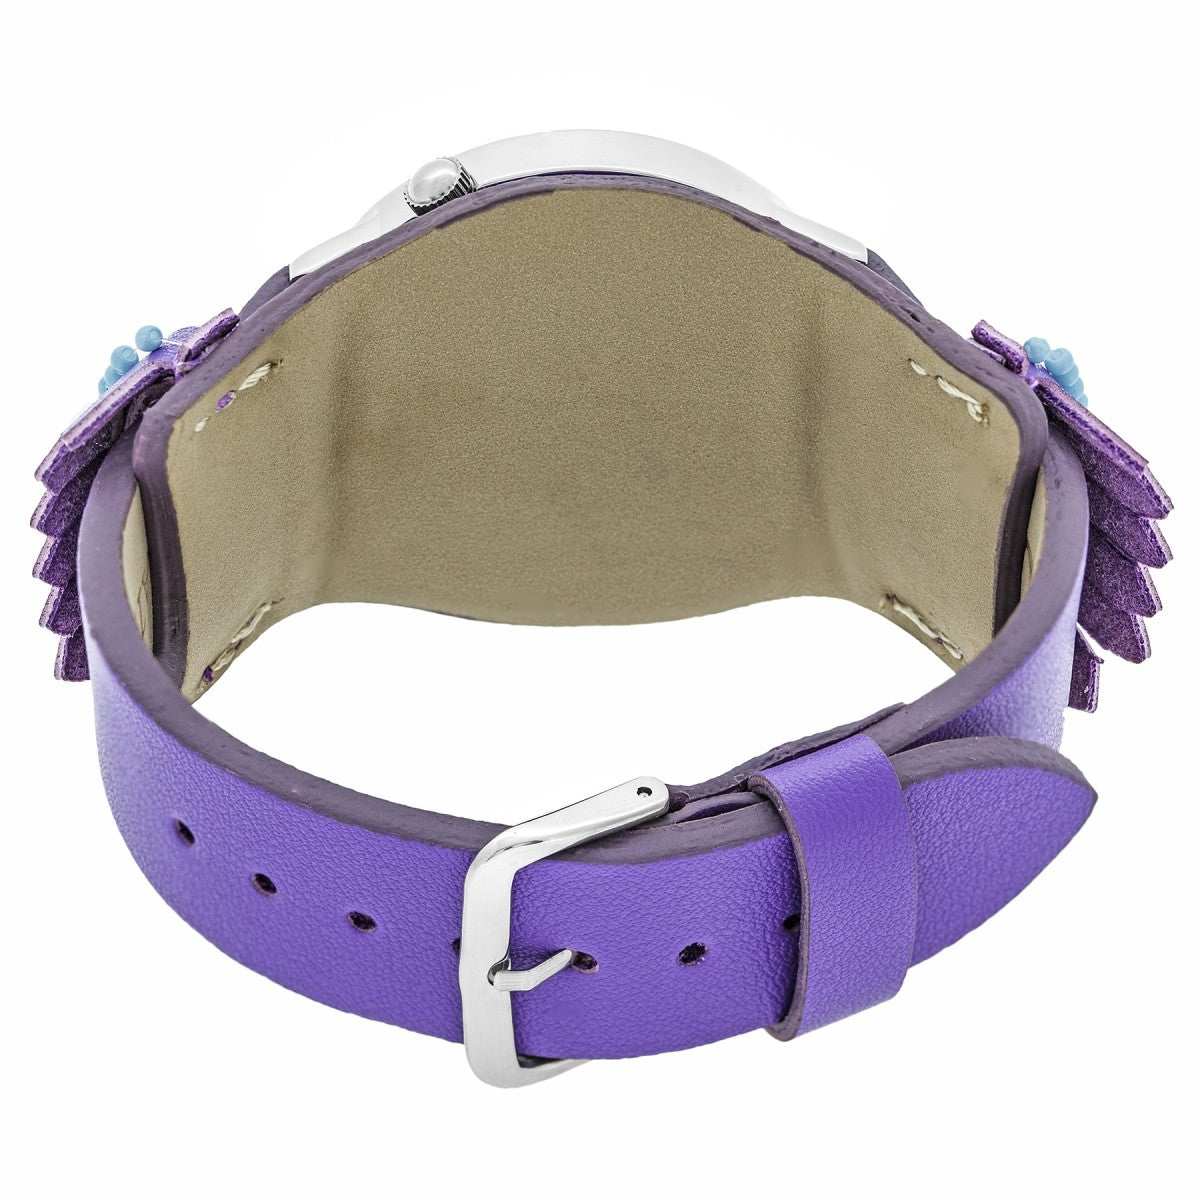 Boum Originaire Marbleizied-Dial Leather-Band Watch w/ Fringed Sheath - Silver/Purple - BOUBM4003